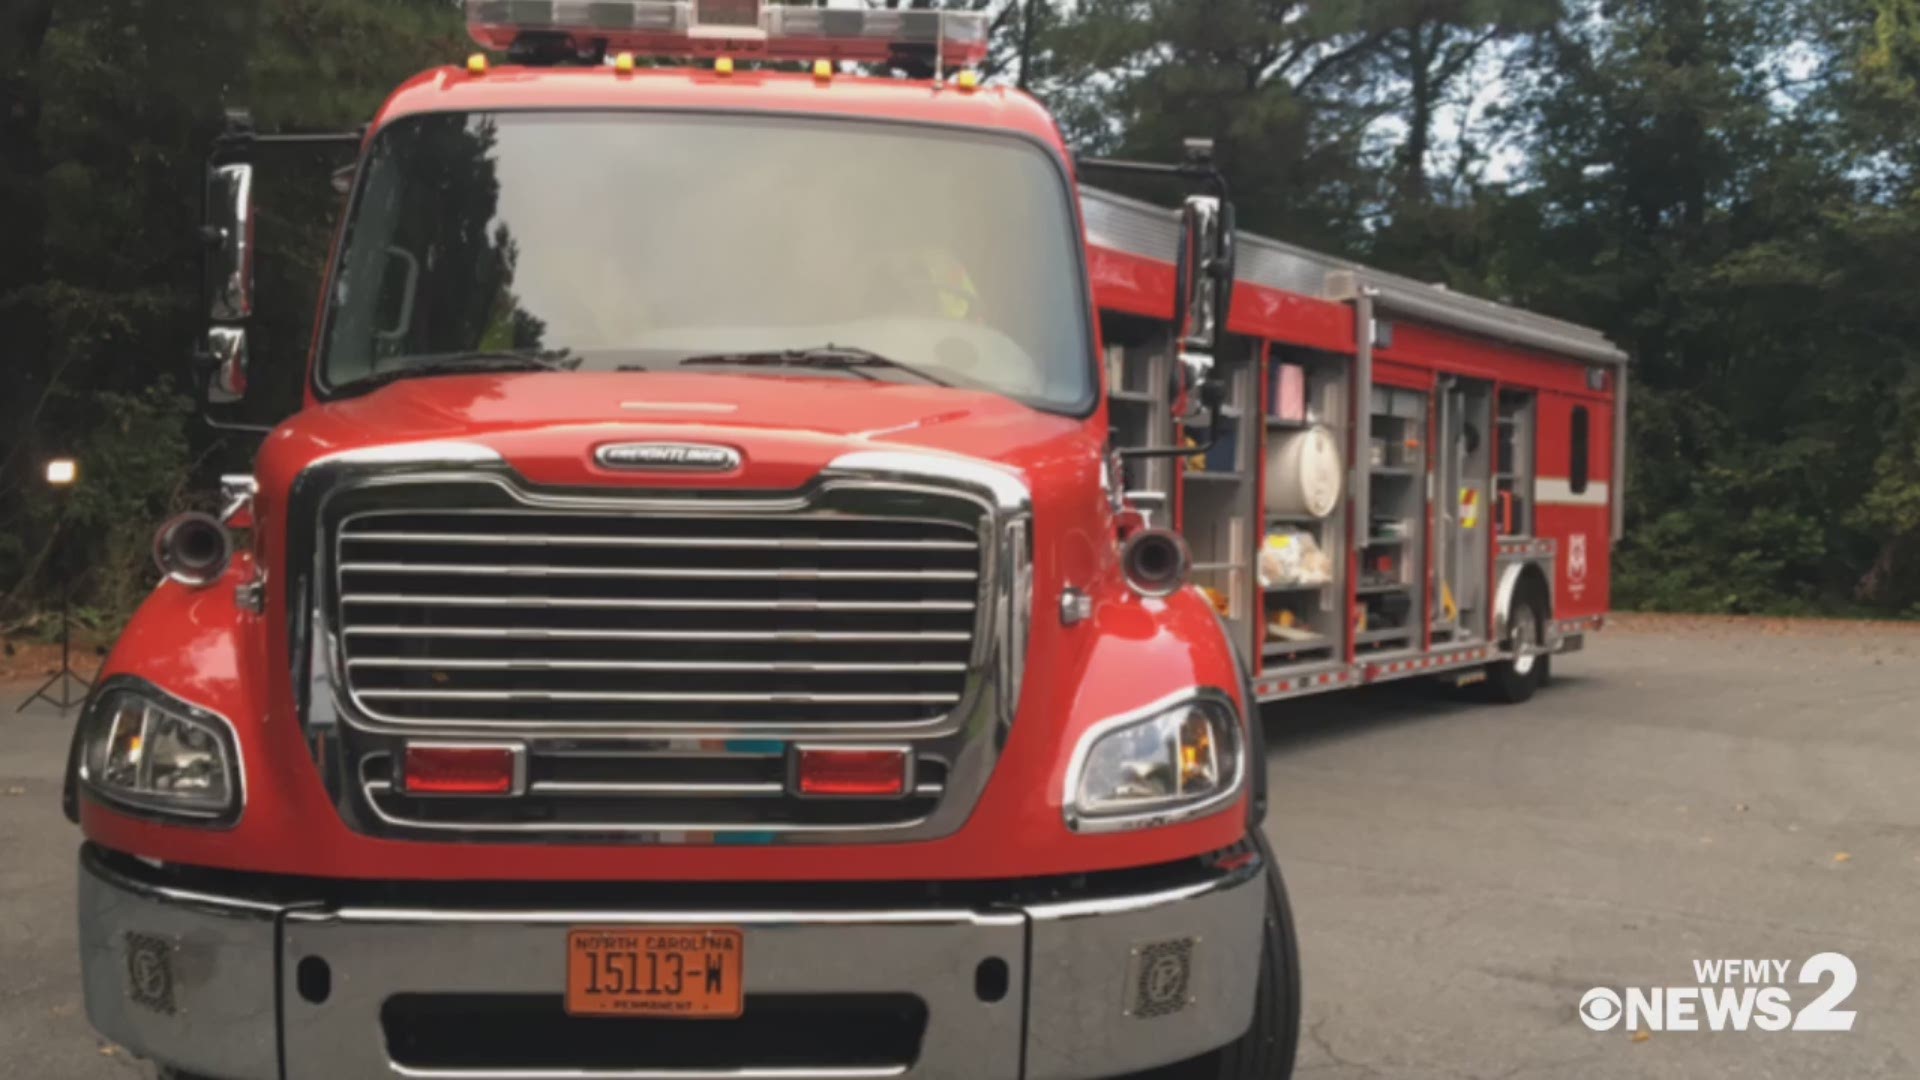 The Winston-Salem Fire Department has a new HAZMAT truck that will help detect hazardous substances.